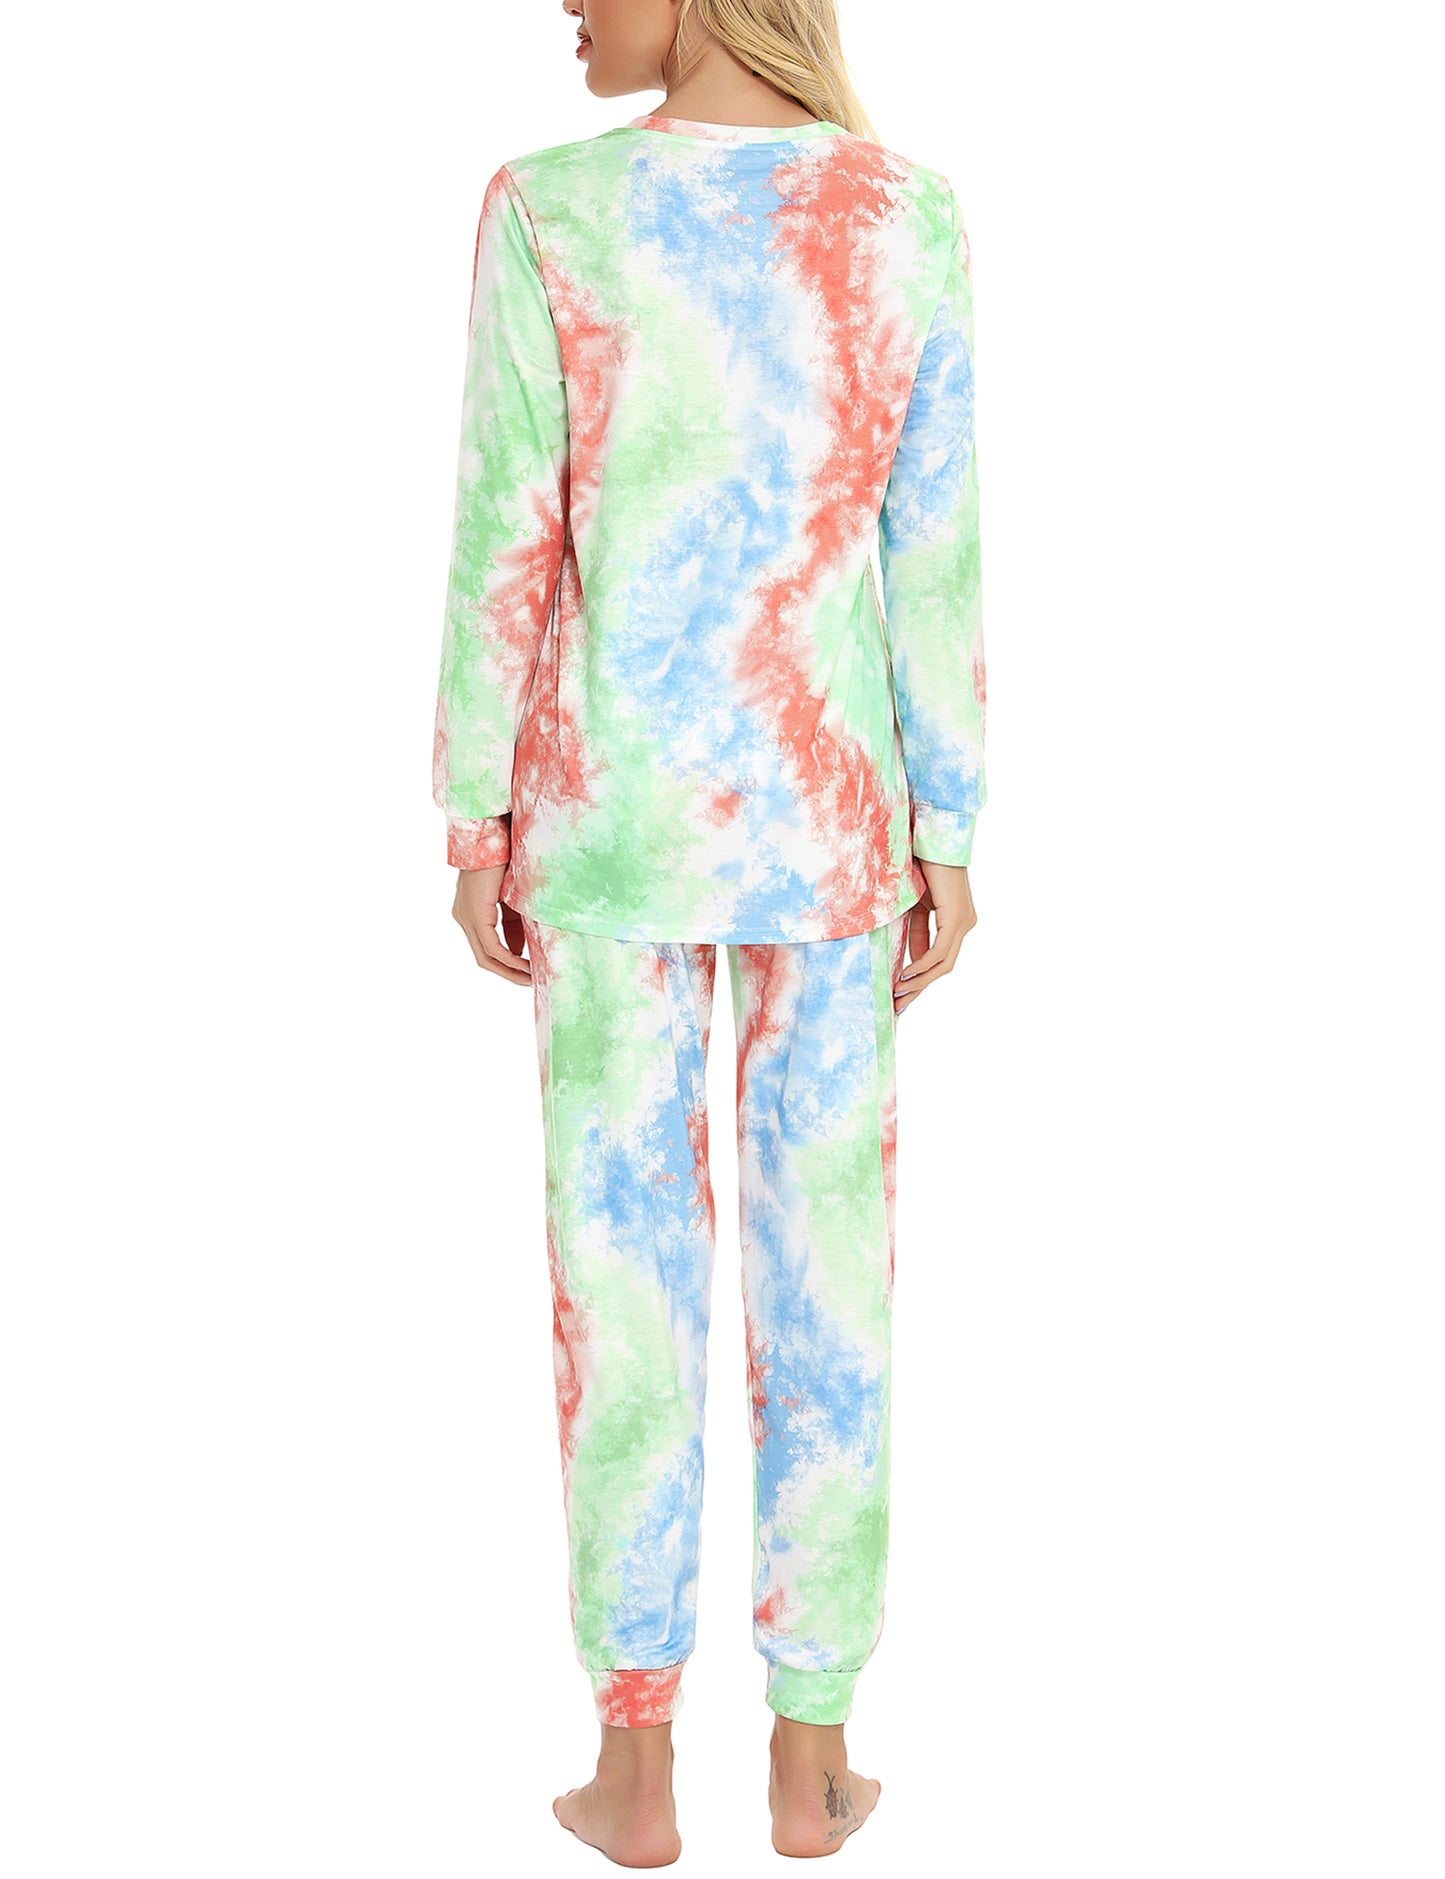 Mathea Women's Two-Piece Sleepwear Tie-Dye Printed Long Casual Set